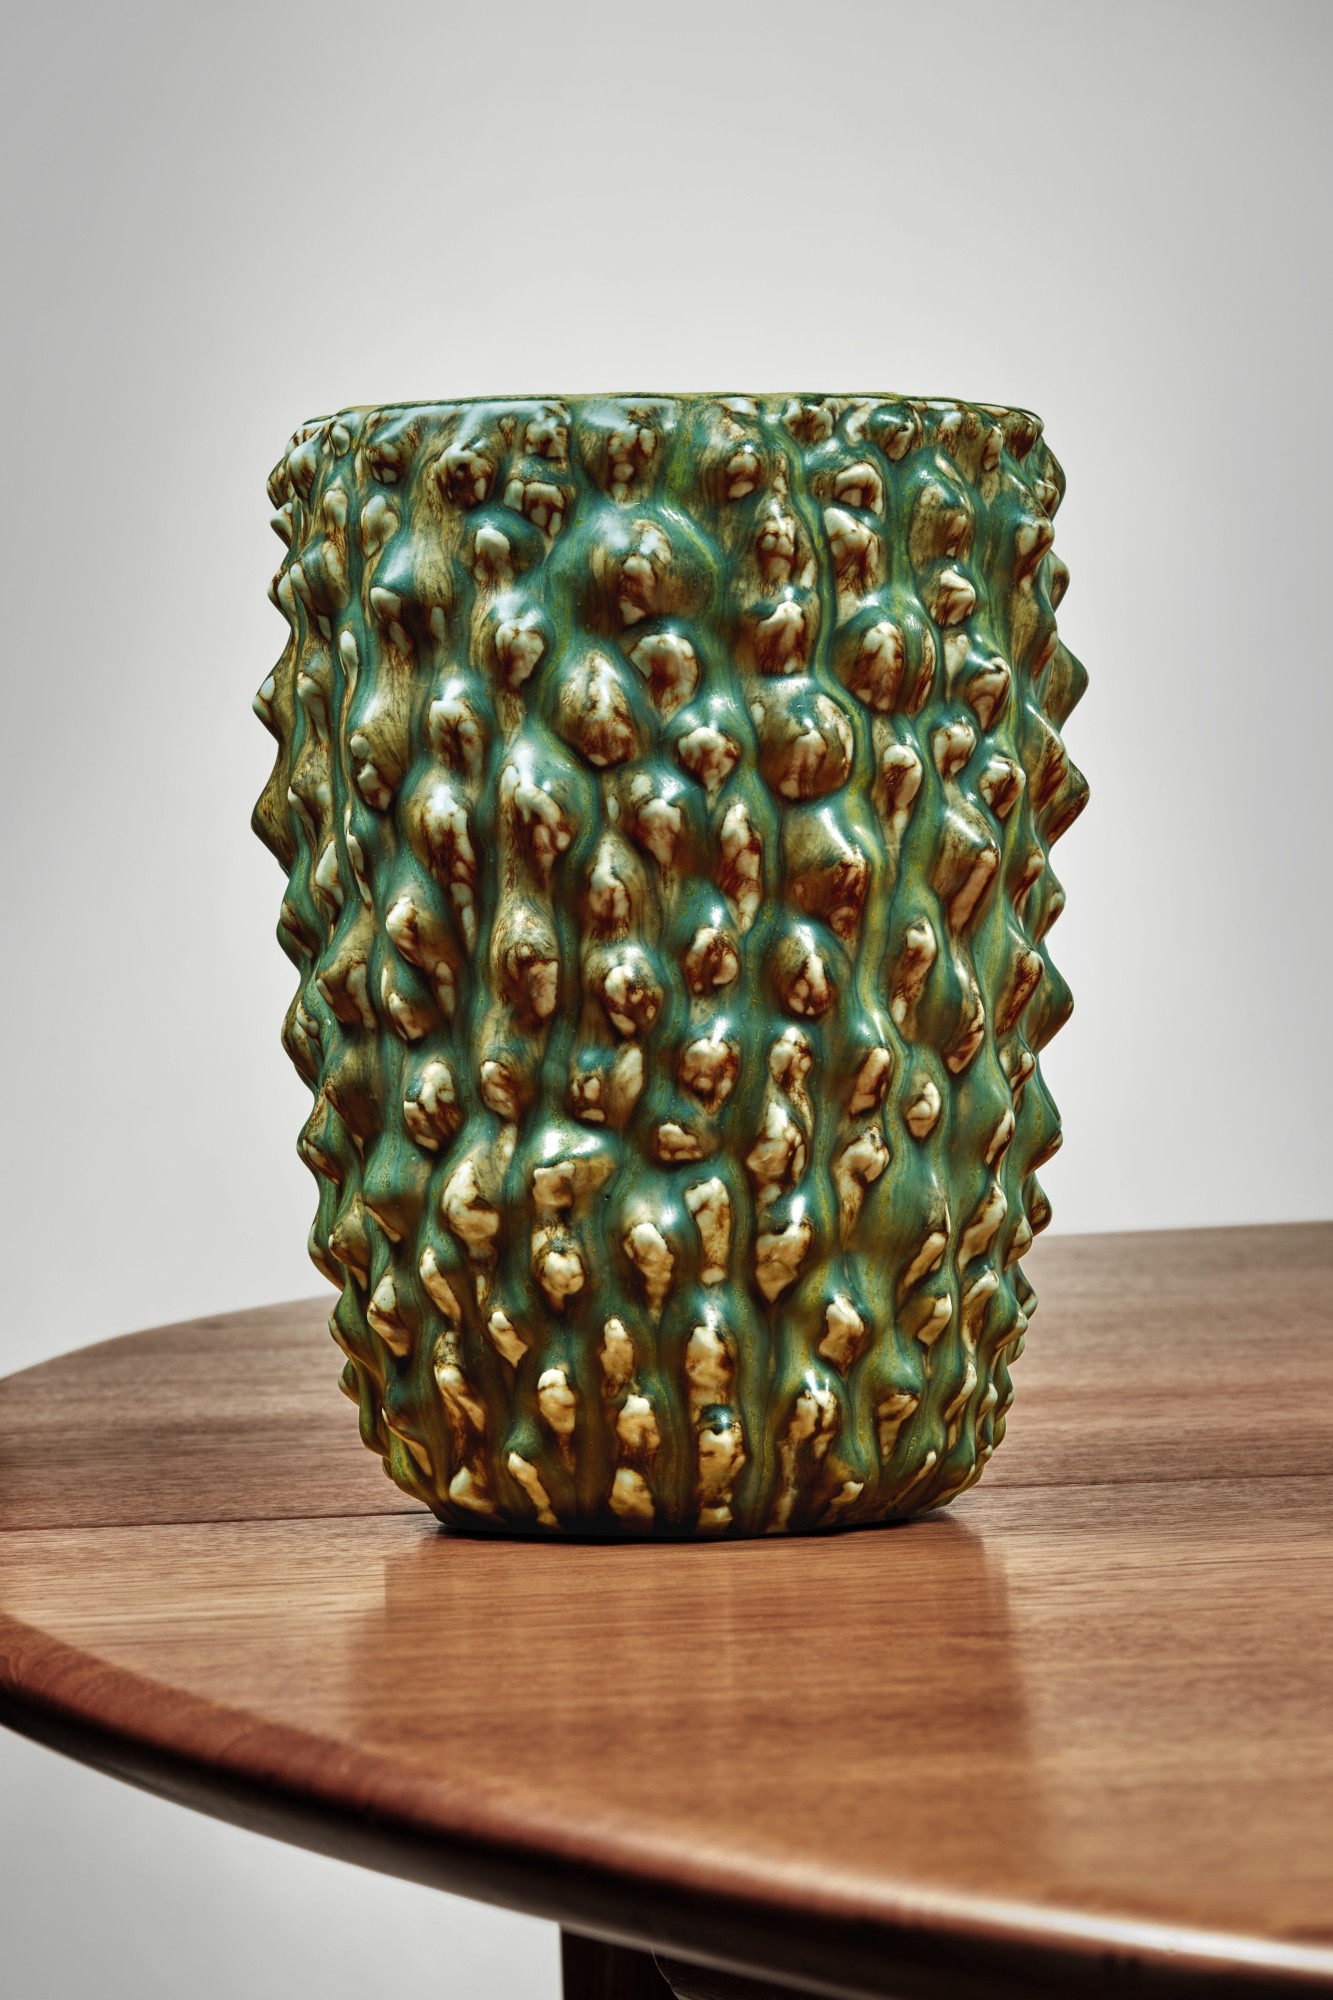 Artwork by Axel Salto, Vase, Made of stoneware